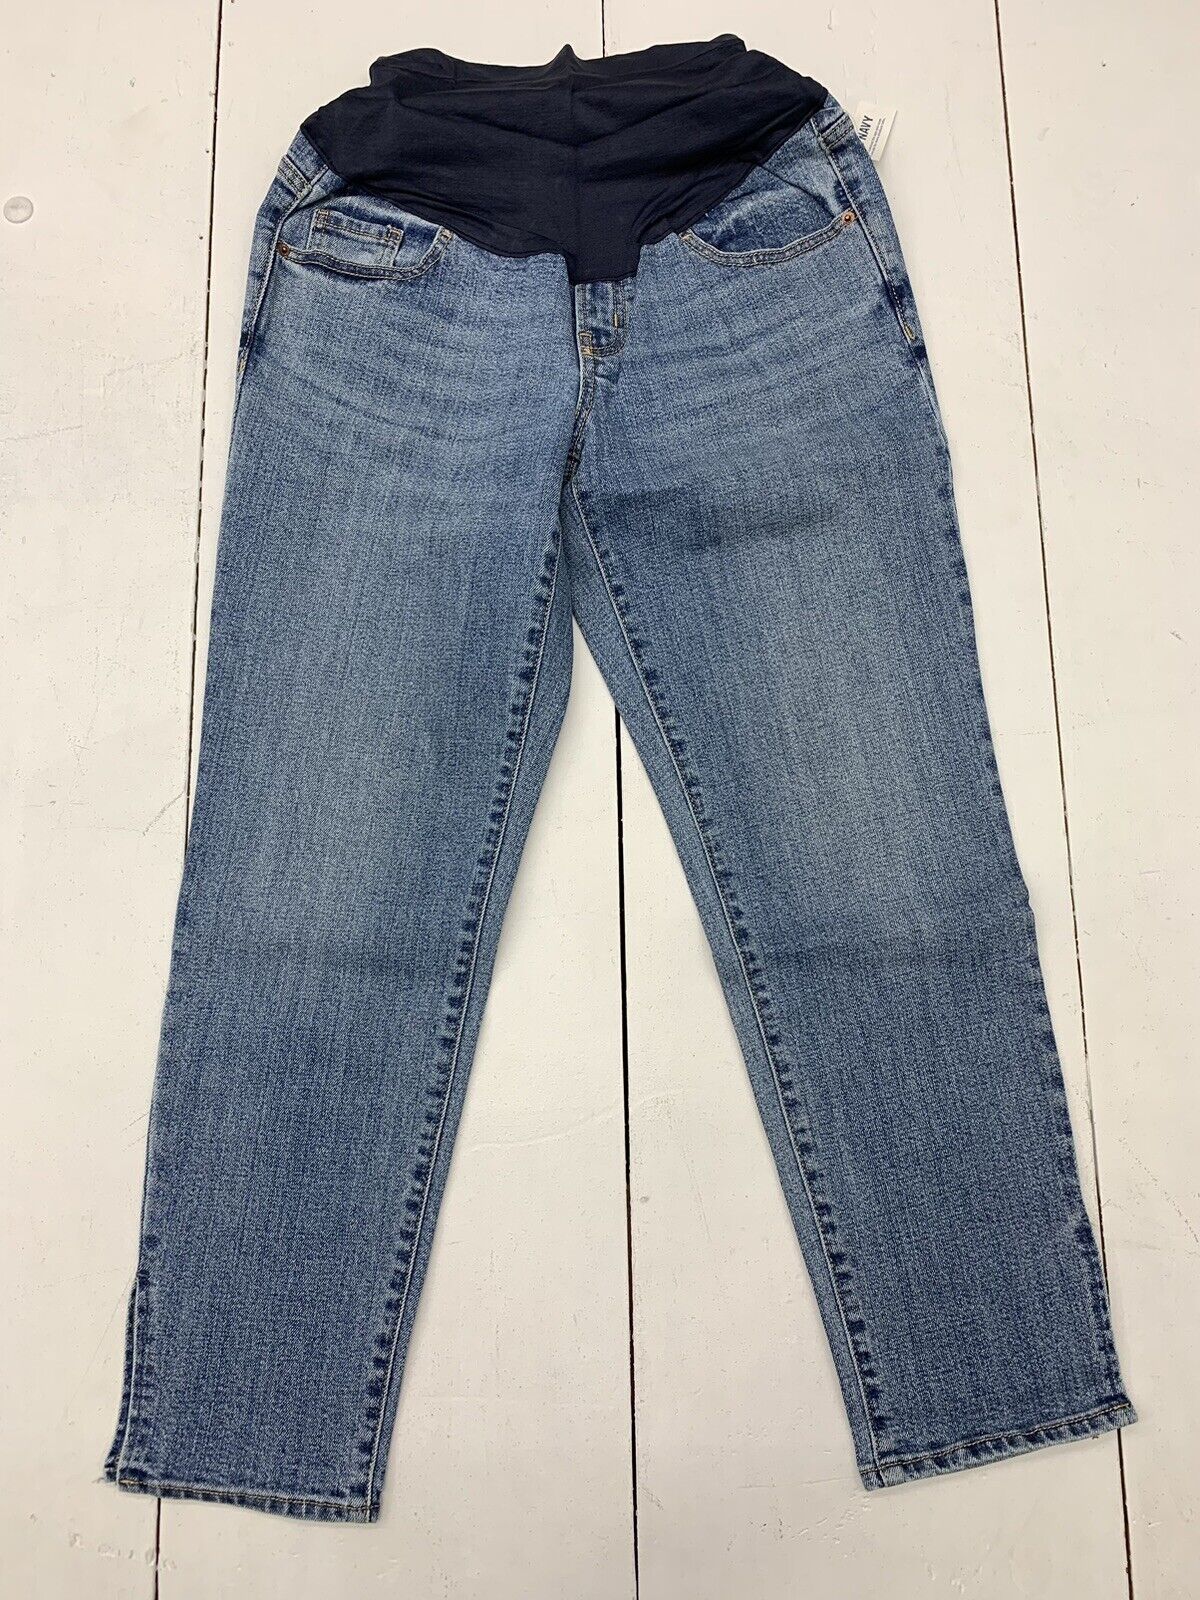 Vintage Old Navy jeans. Size 8 long.